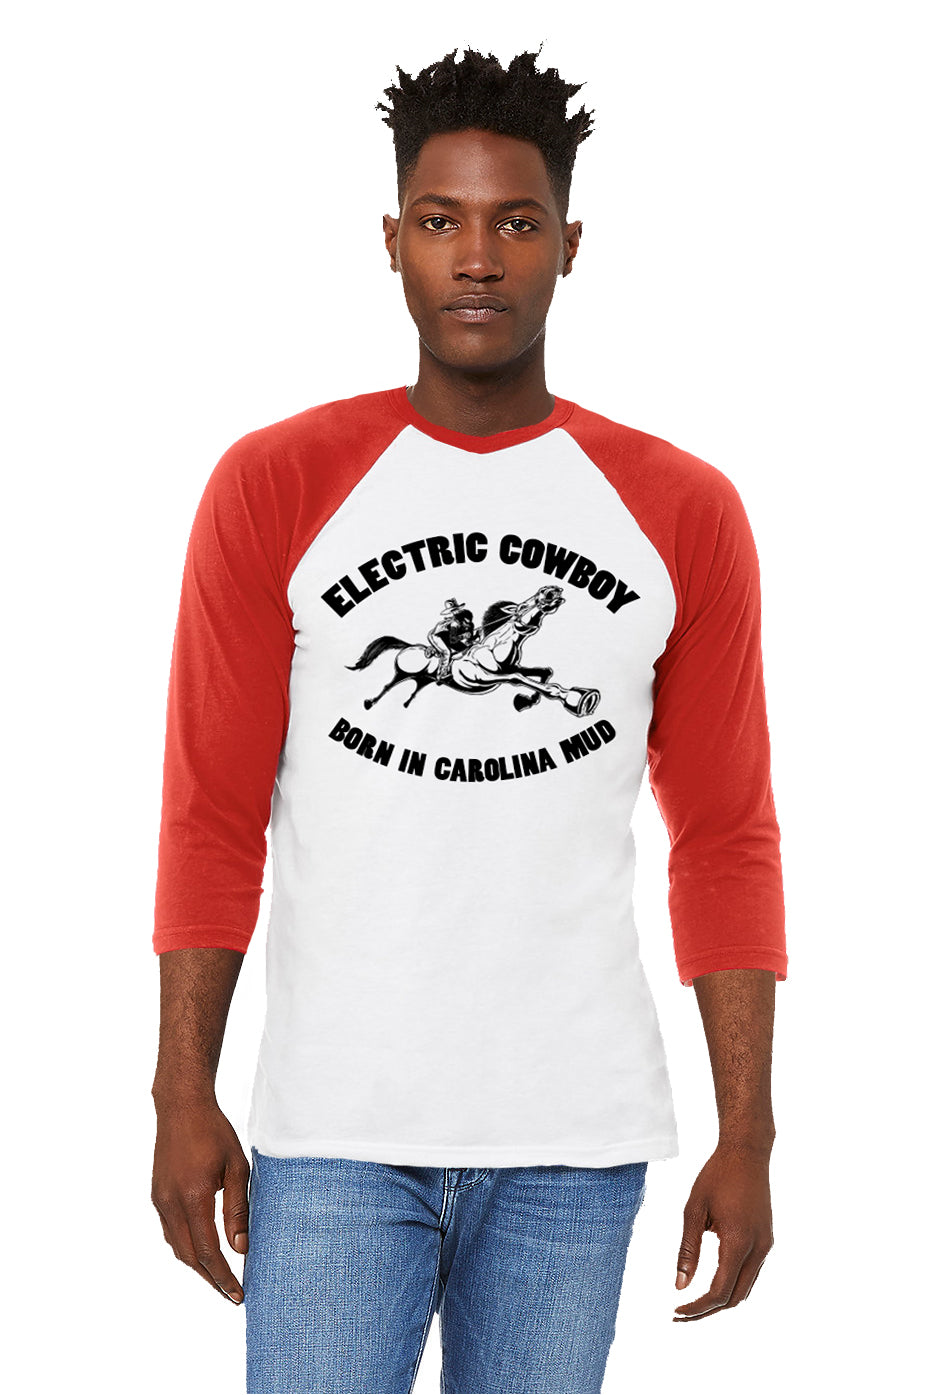 Boulevards - Electric Cowboy: Born In Carolina Mud 3/4 Sleeve Baseball Shirt